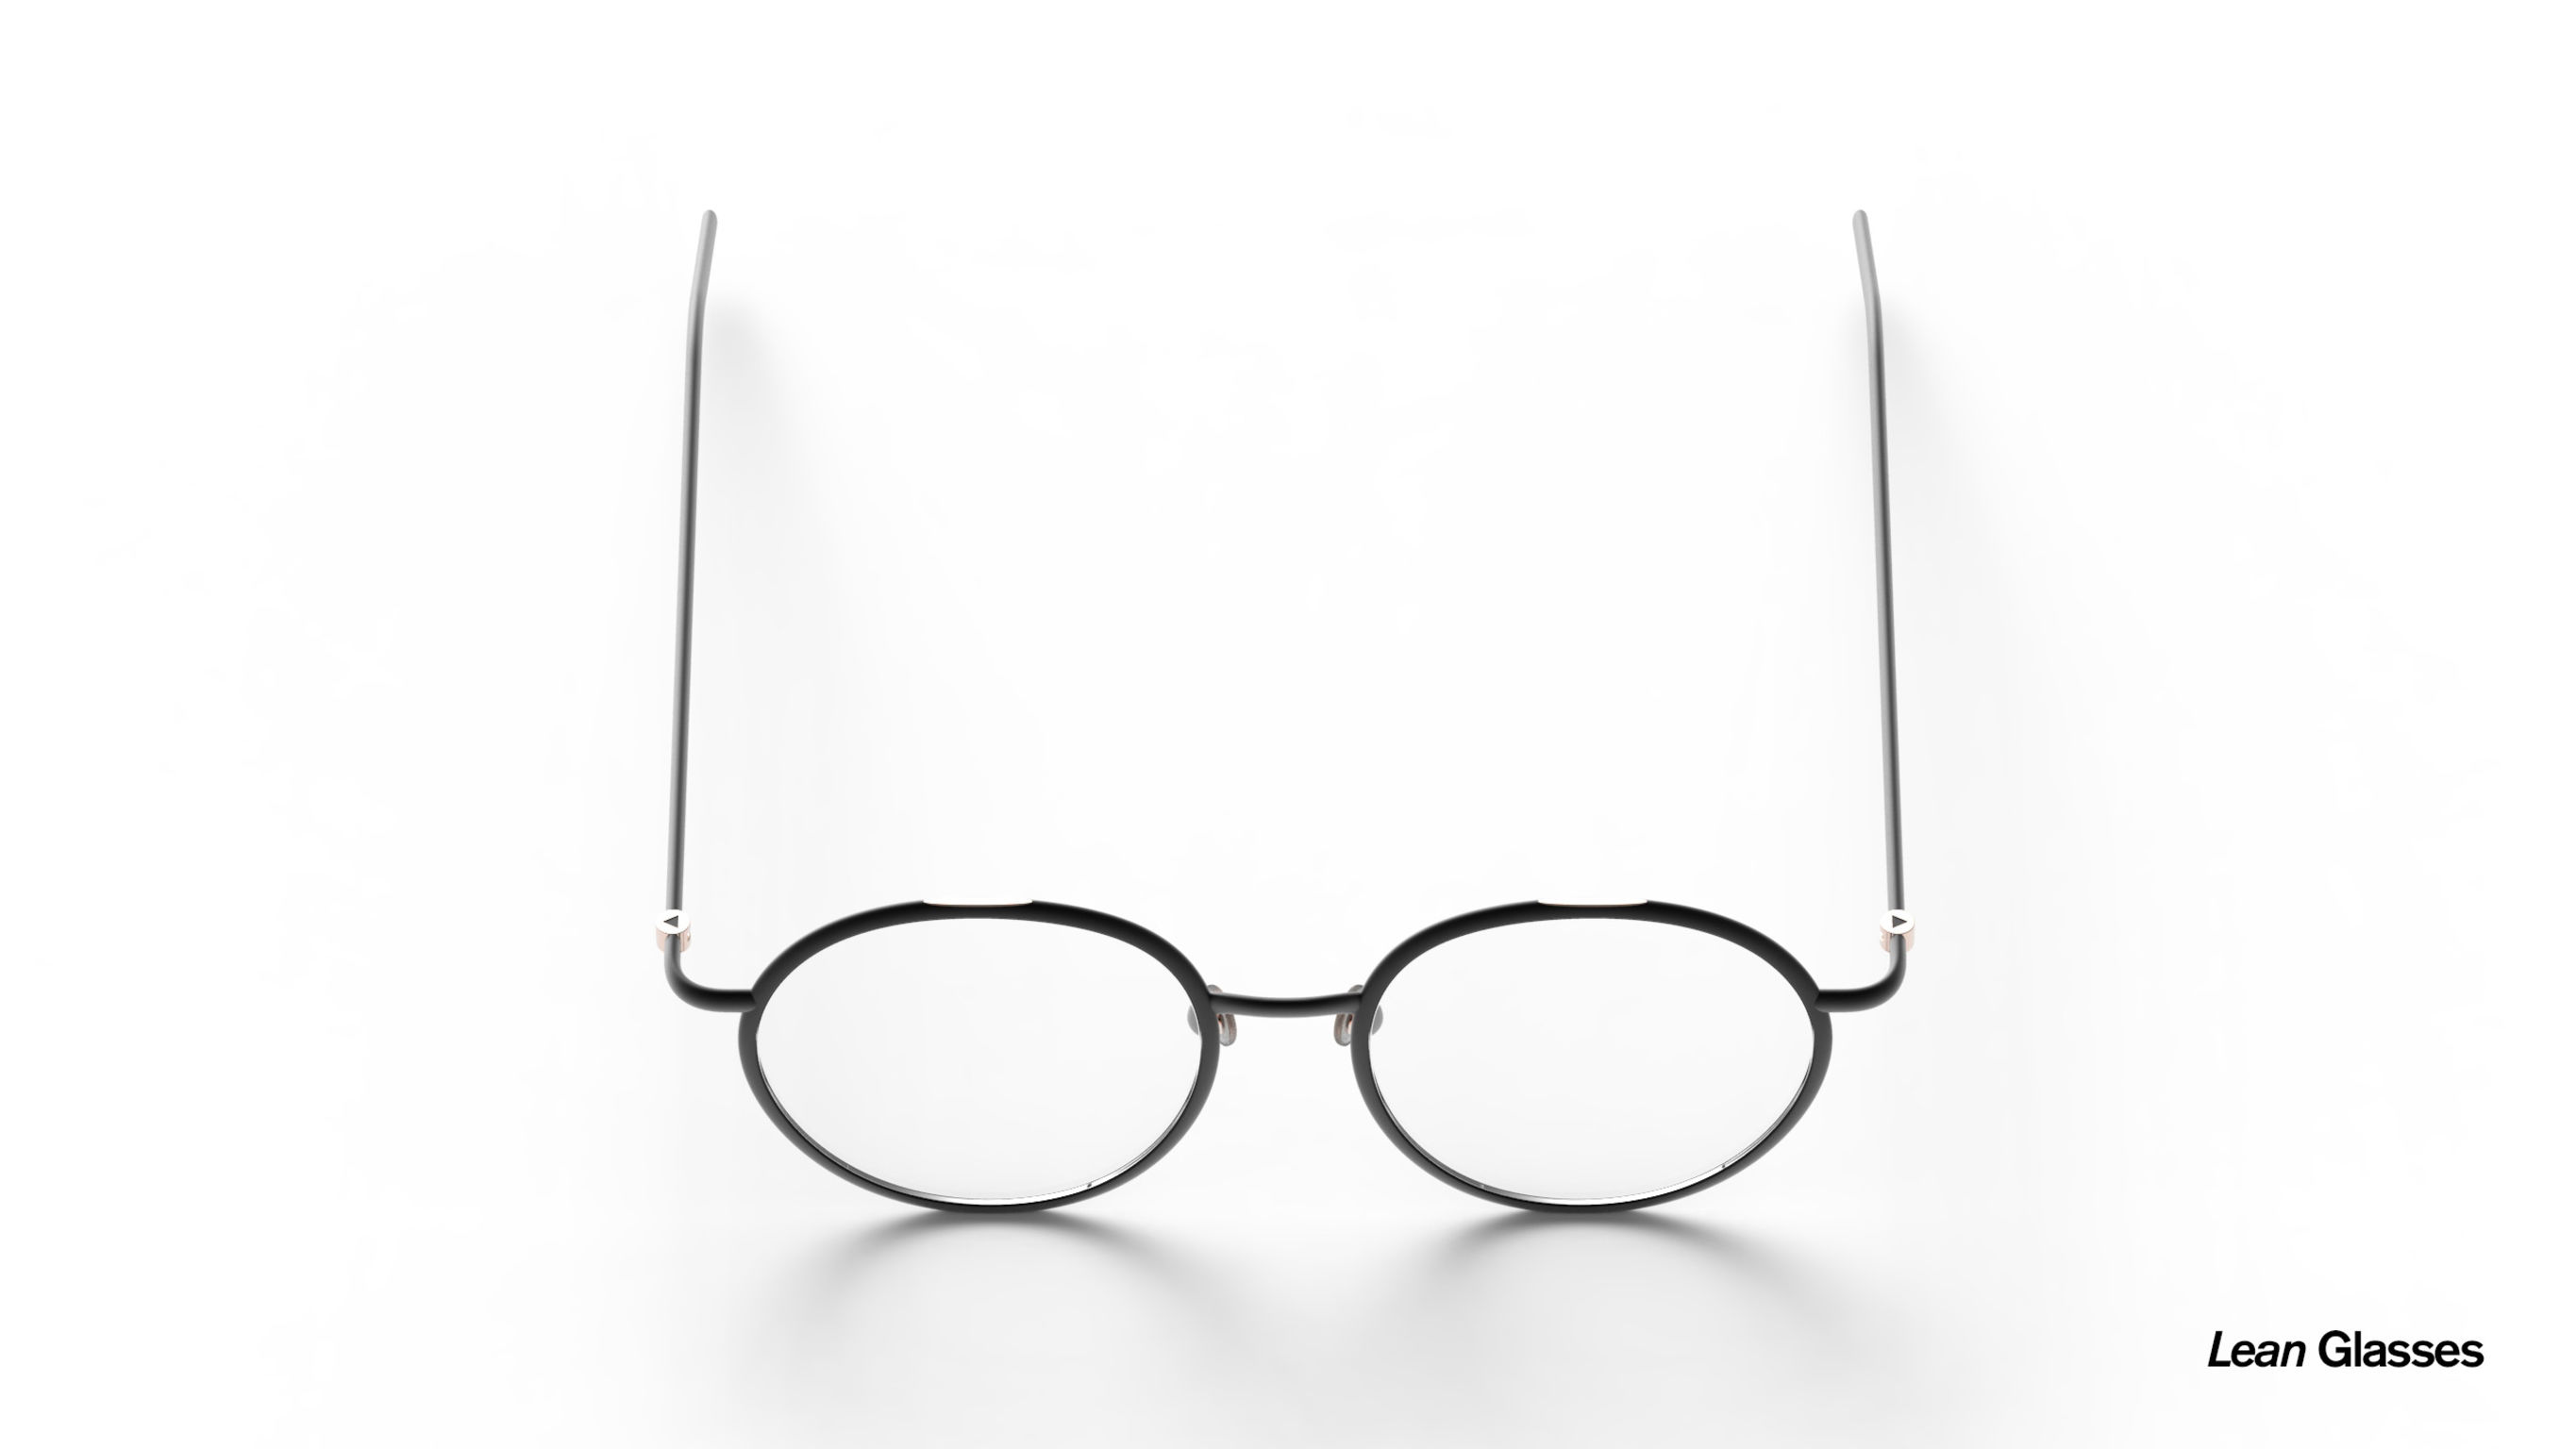 Lean Glasses